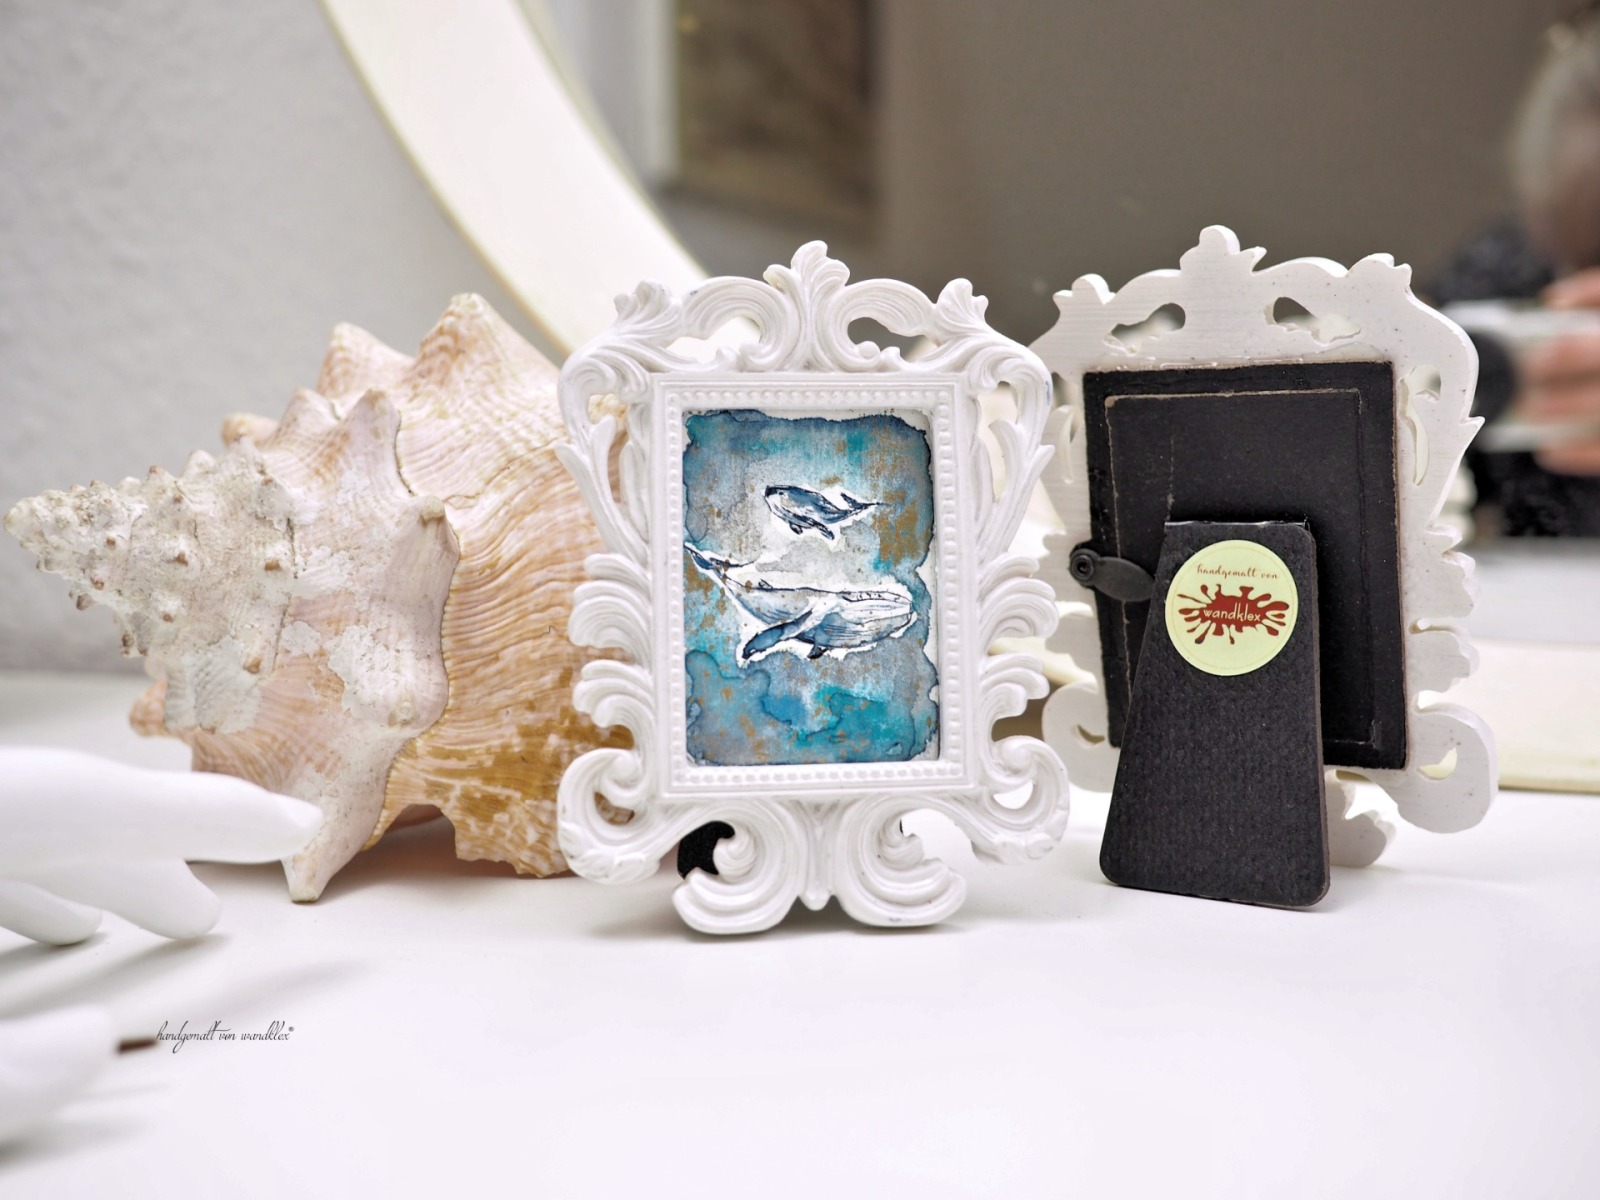 Miniatur-Portrait mit maritimem Motiv Bild 6x45 cm in opulentem weißem Mini-Schnörkelrahmen 2